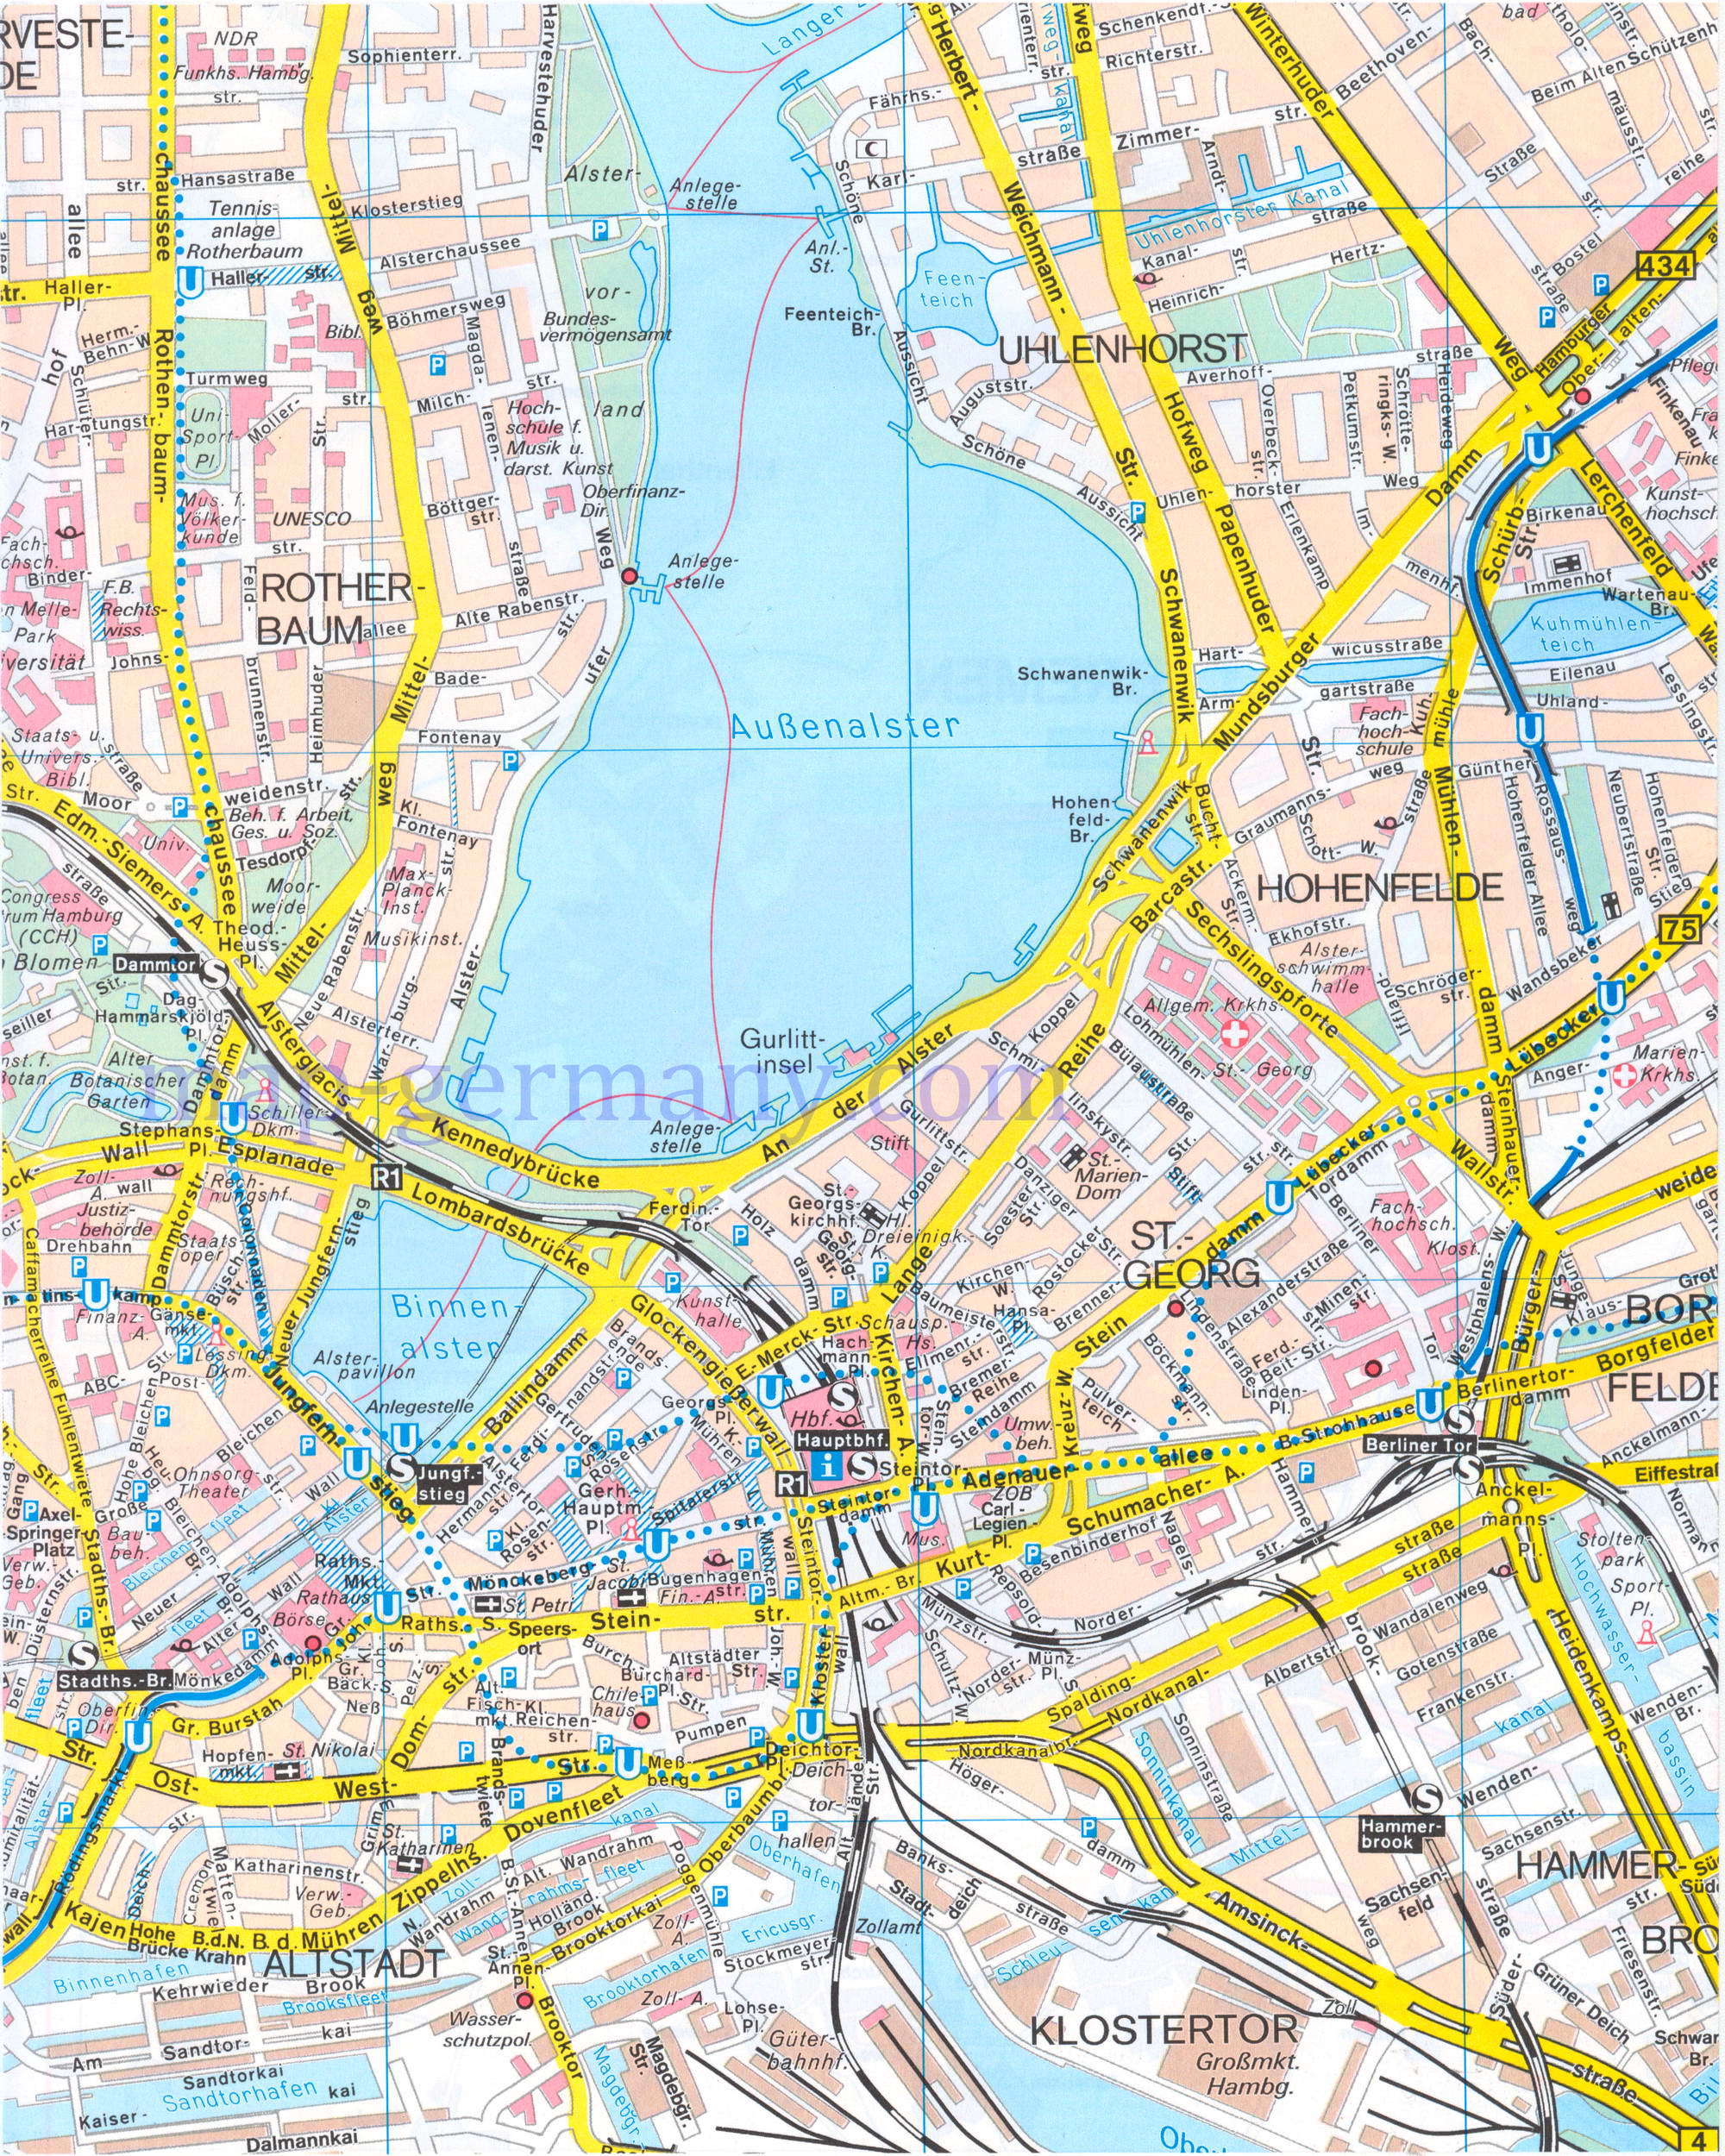 Карта улиц Гамбурга. Подробная карта улиц города Гамбург, B0 - 